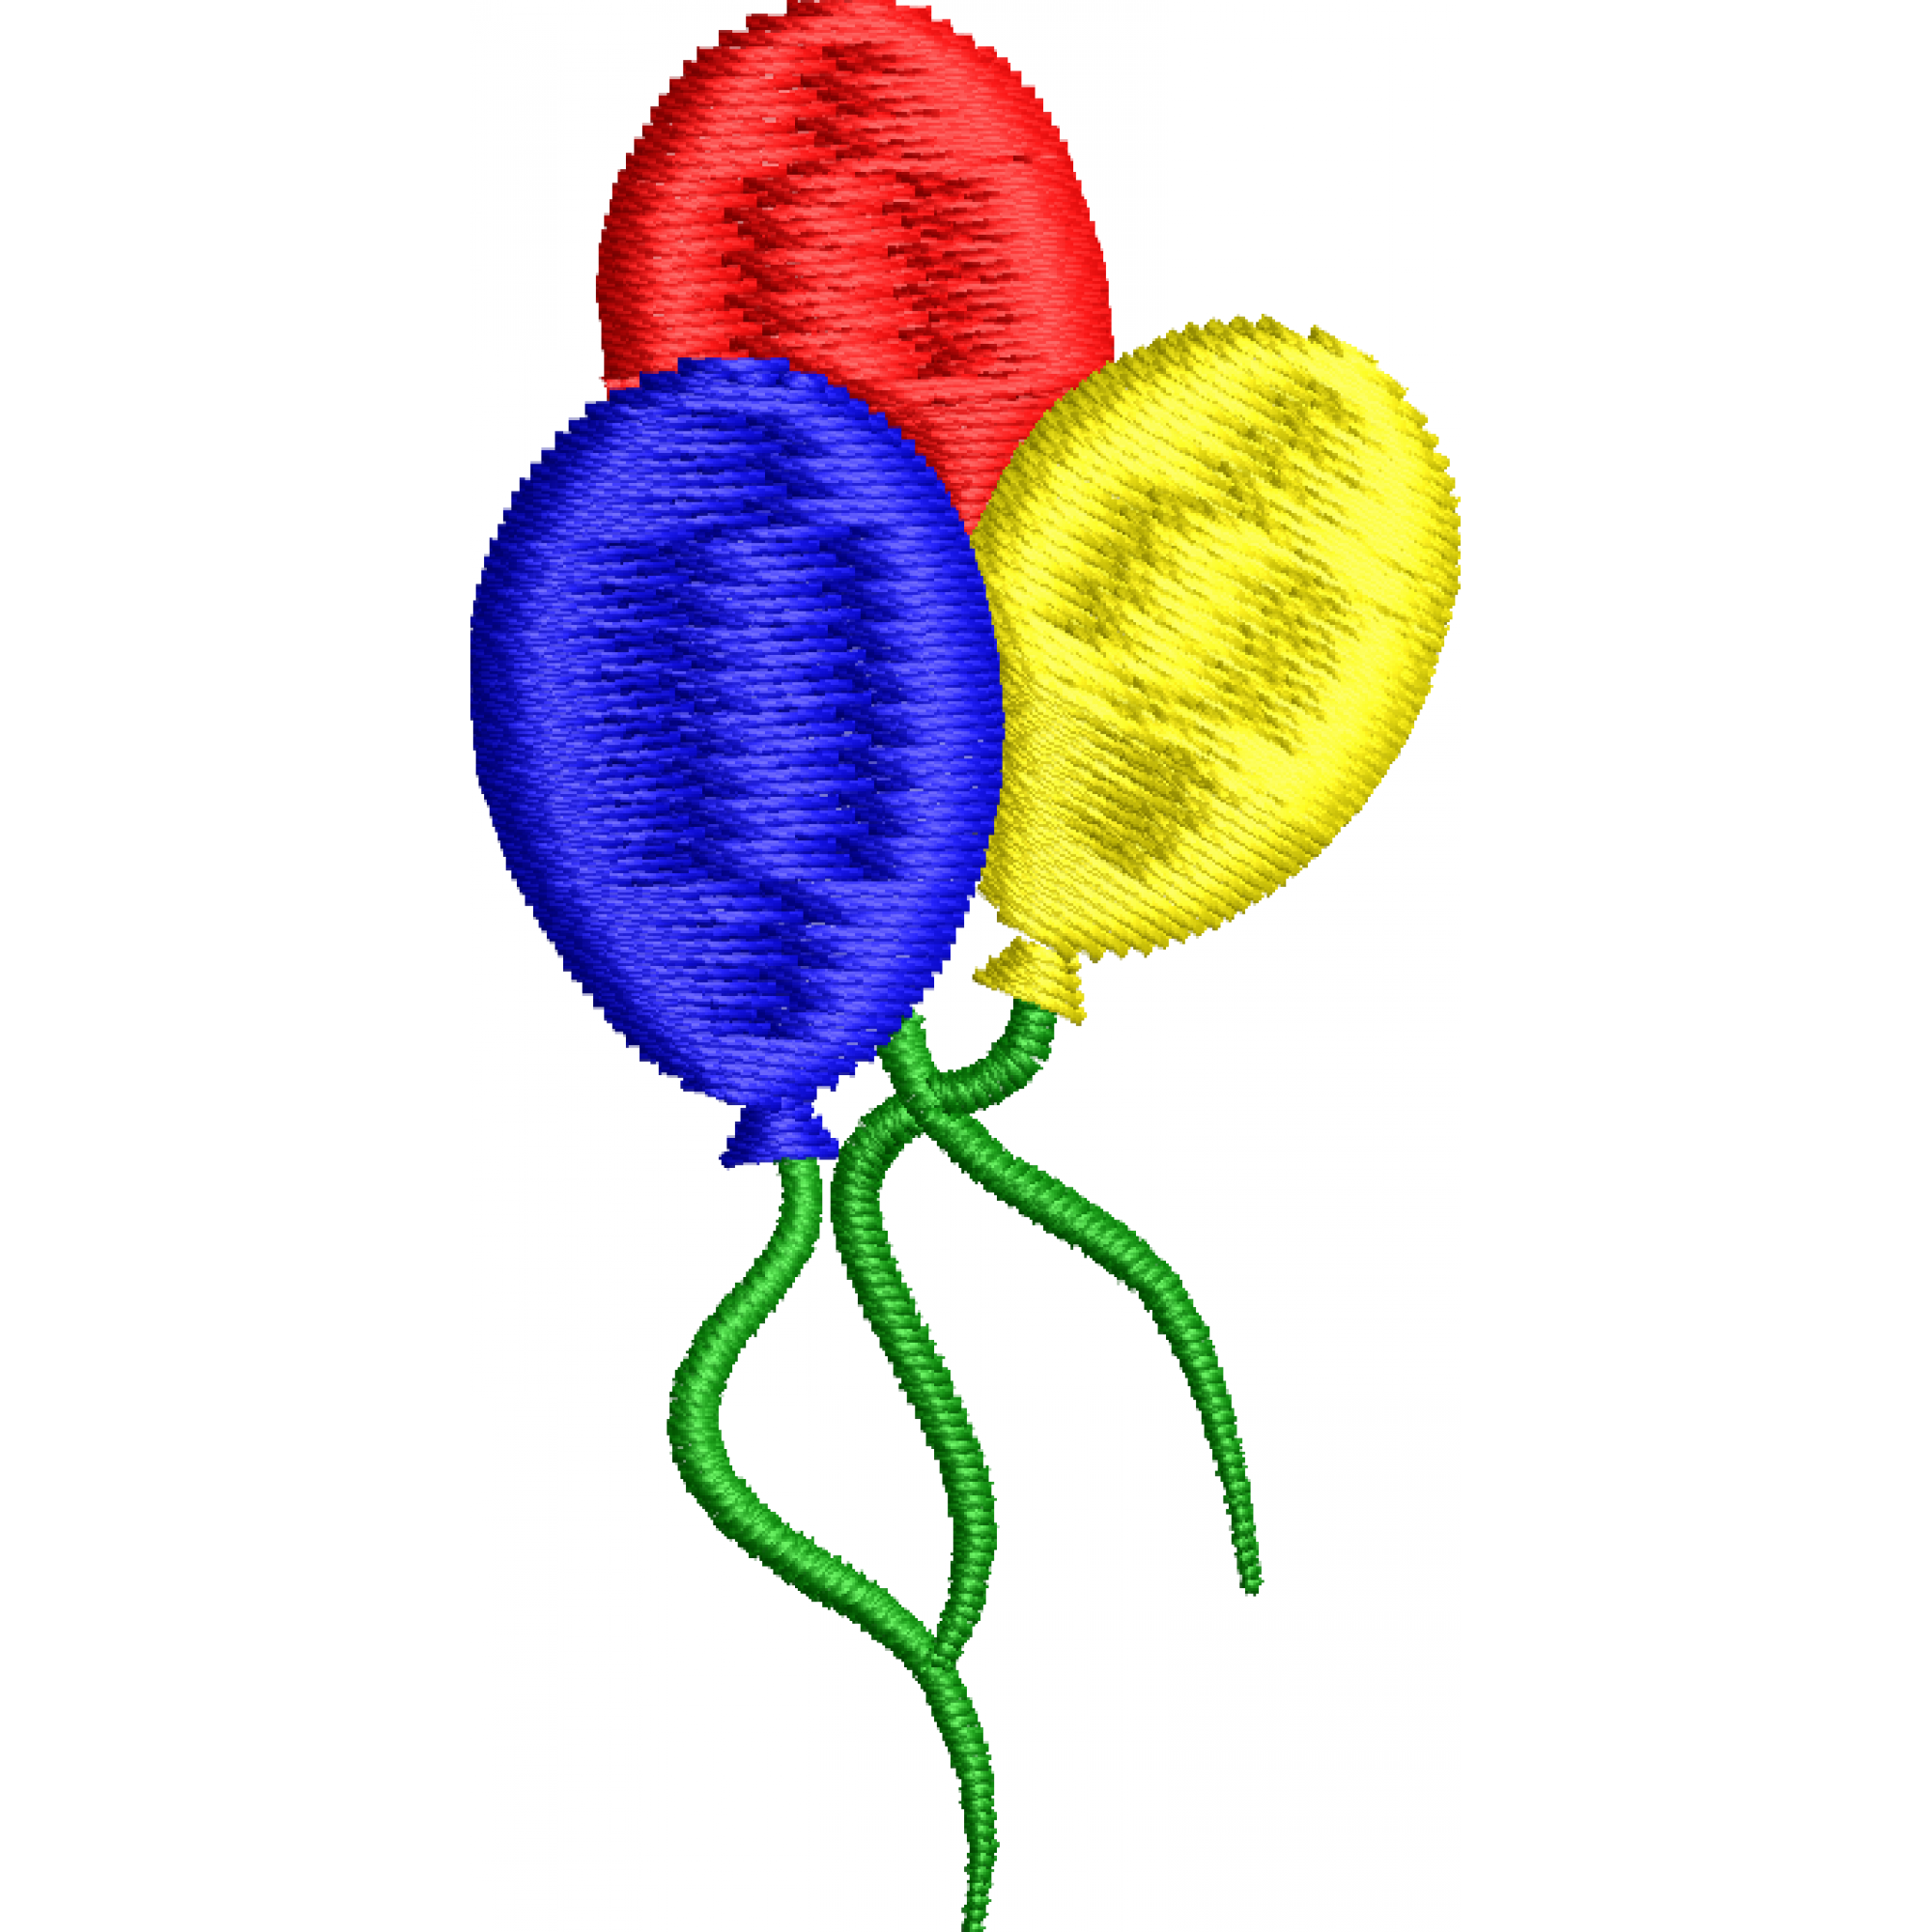 Triple balloon embroidery design